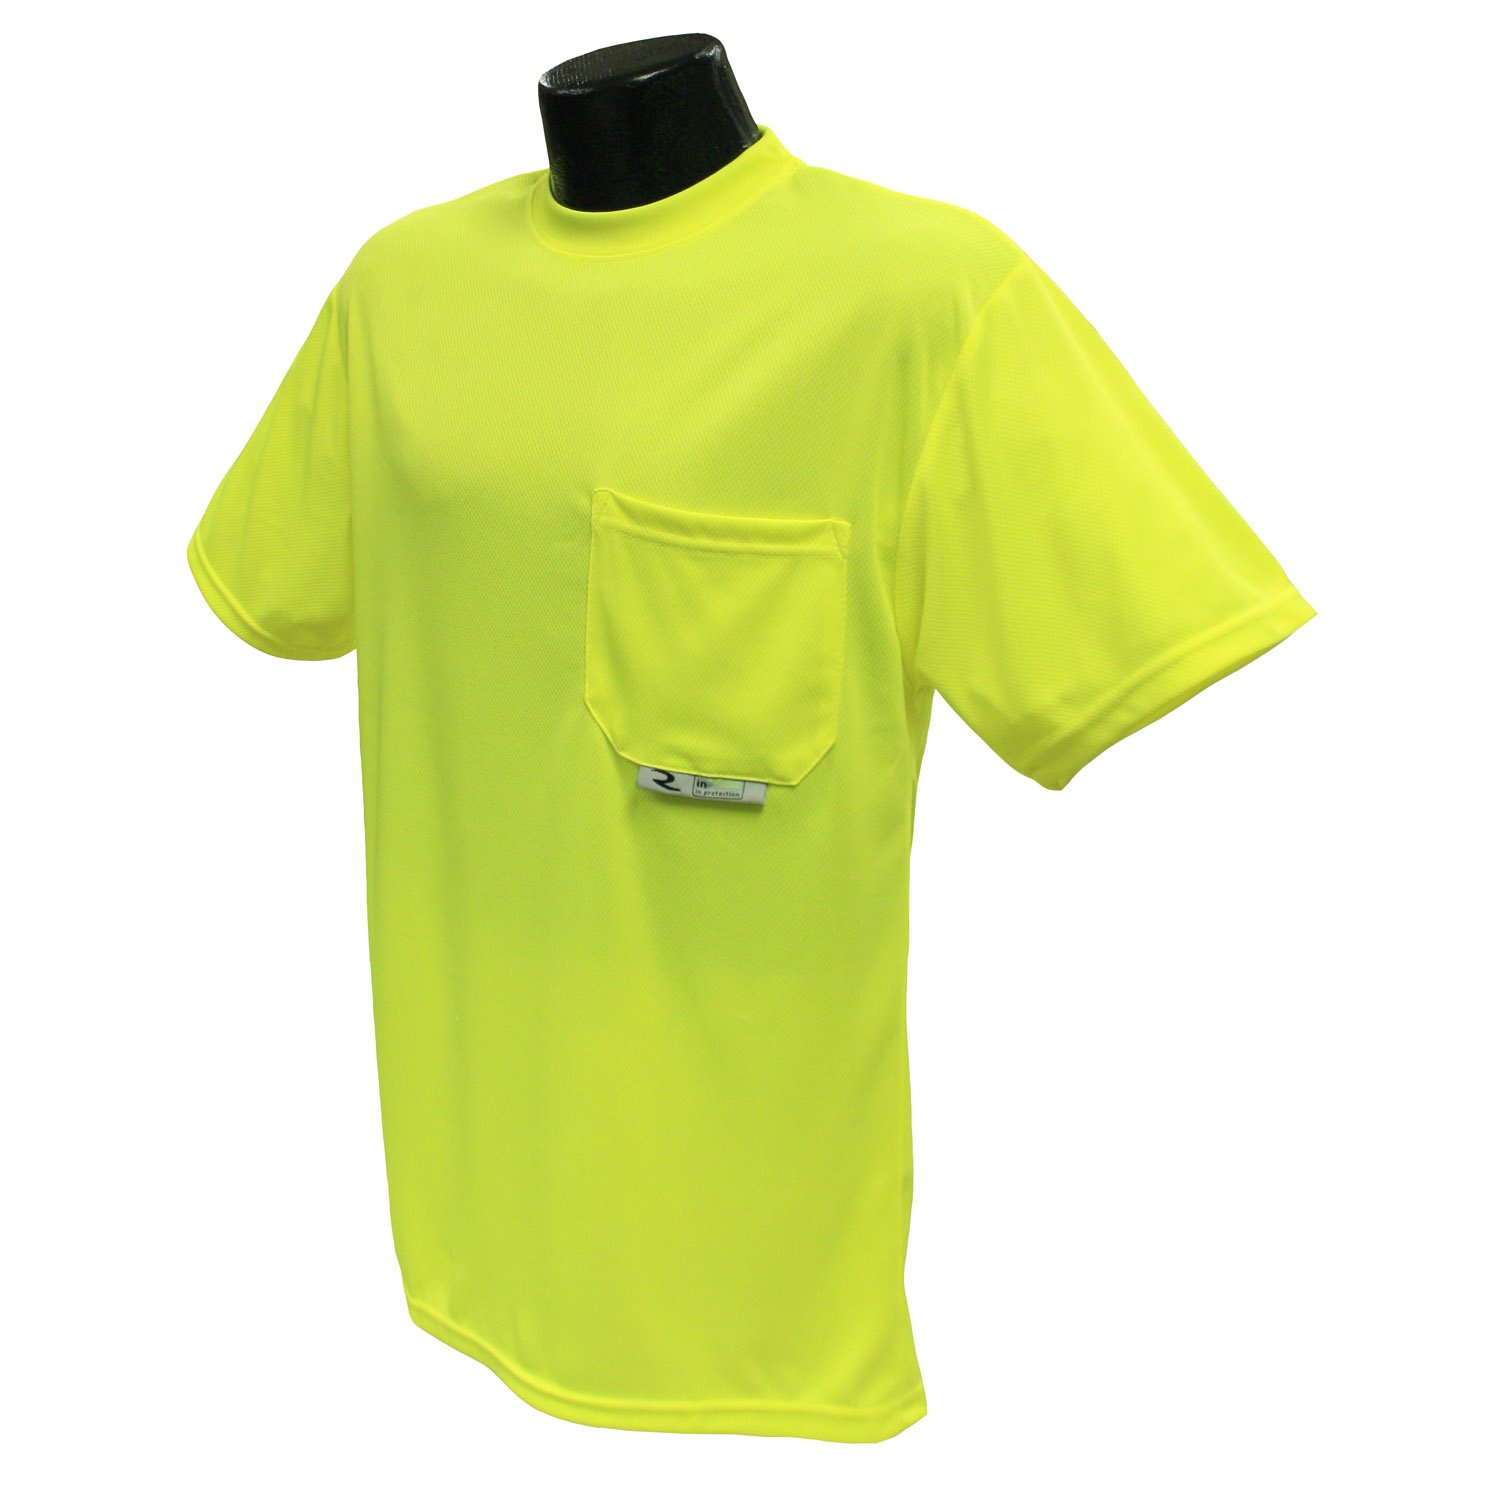 Radians mens T-shirt Industrial Safety Shirt Short Sleeve, Multi, X-Large US